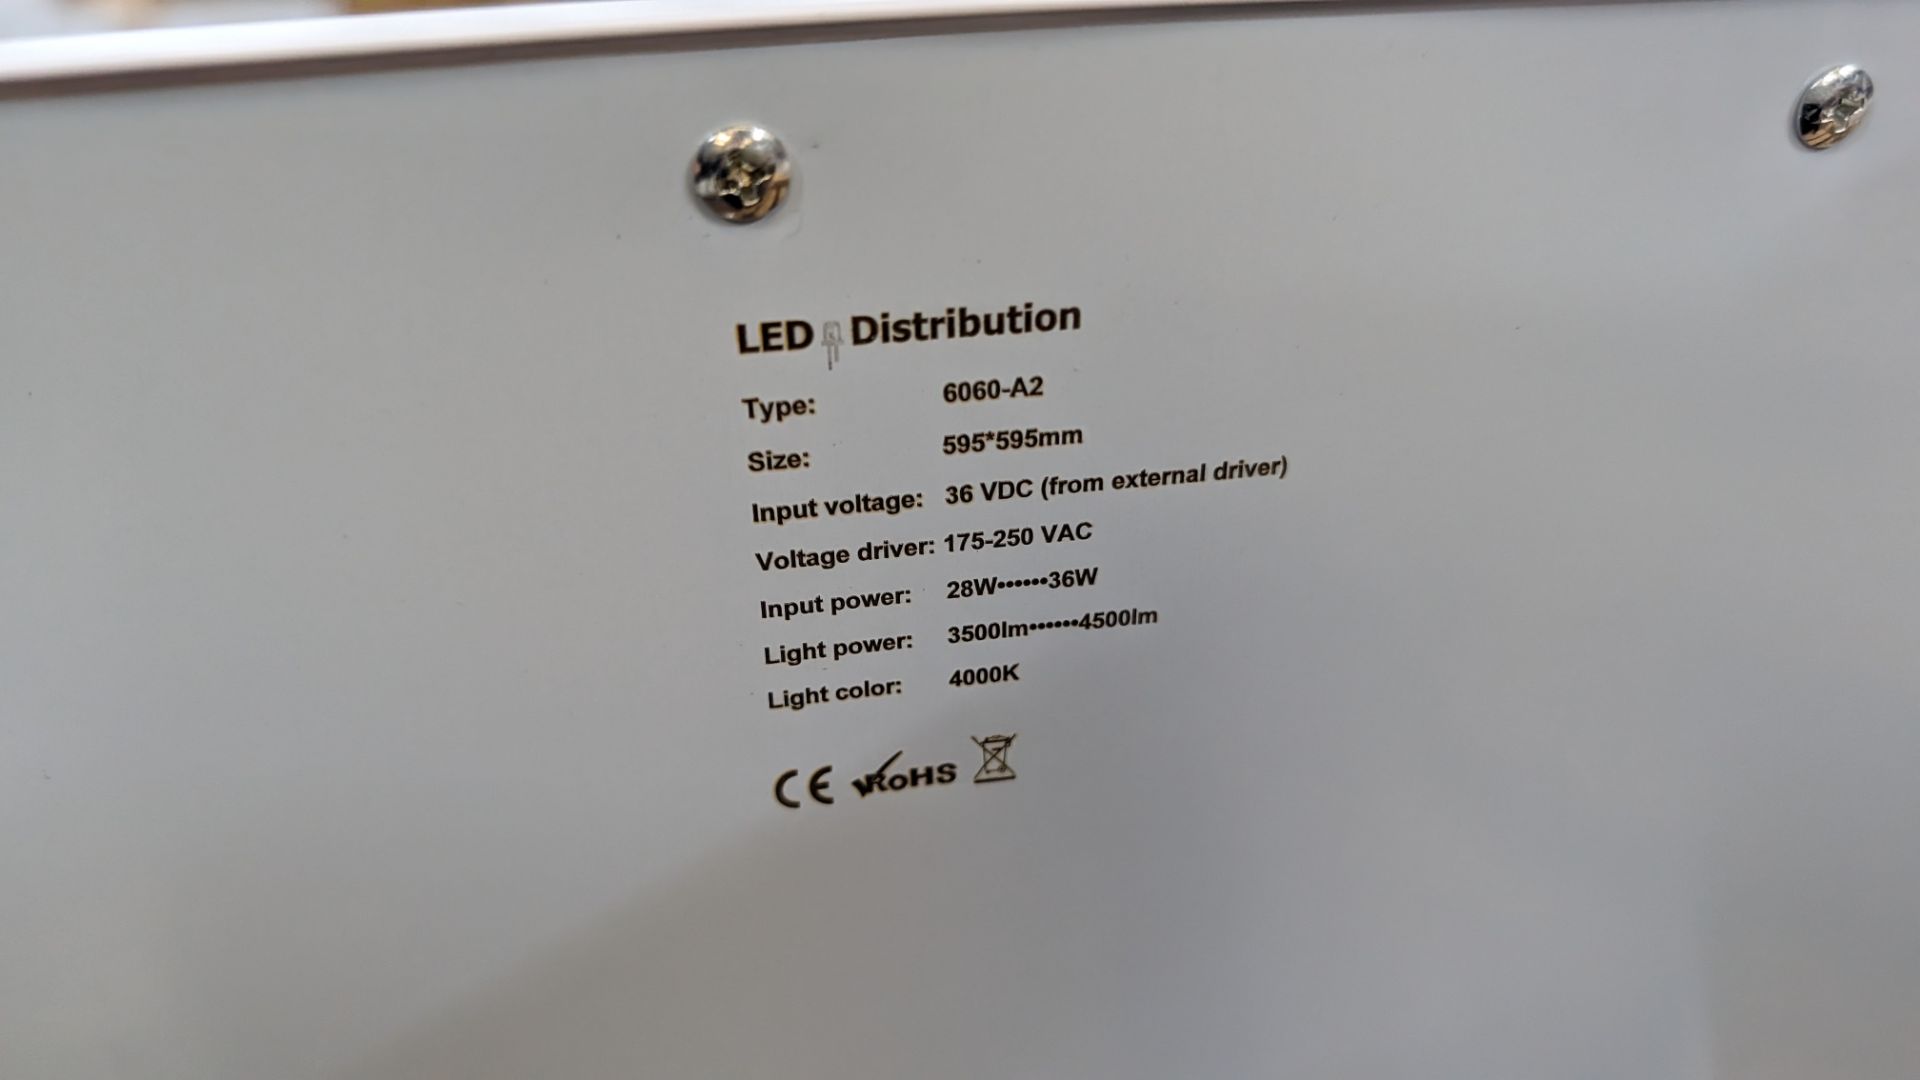 40 off Elegance Premium Eco 595mm x 595mm LED lighting panels. 4000k. 28/36w input power. 36w dri - Image 9 of 14